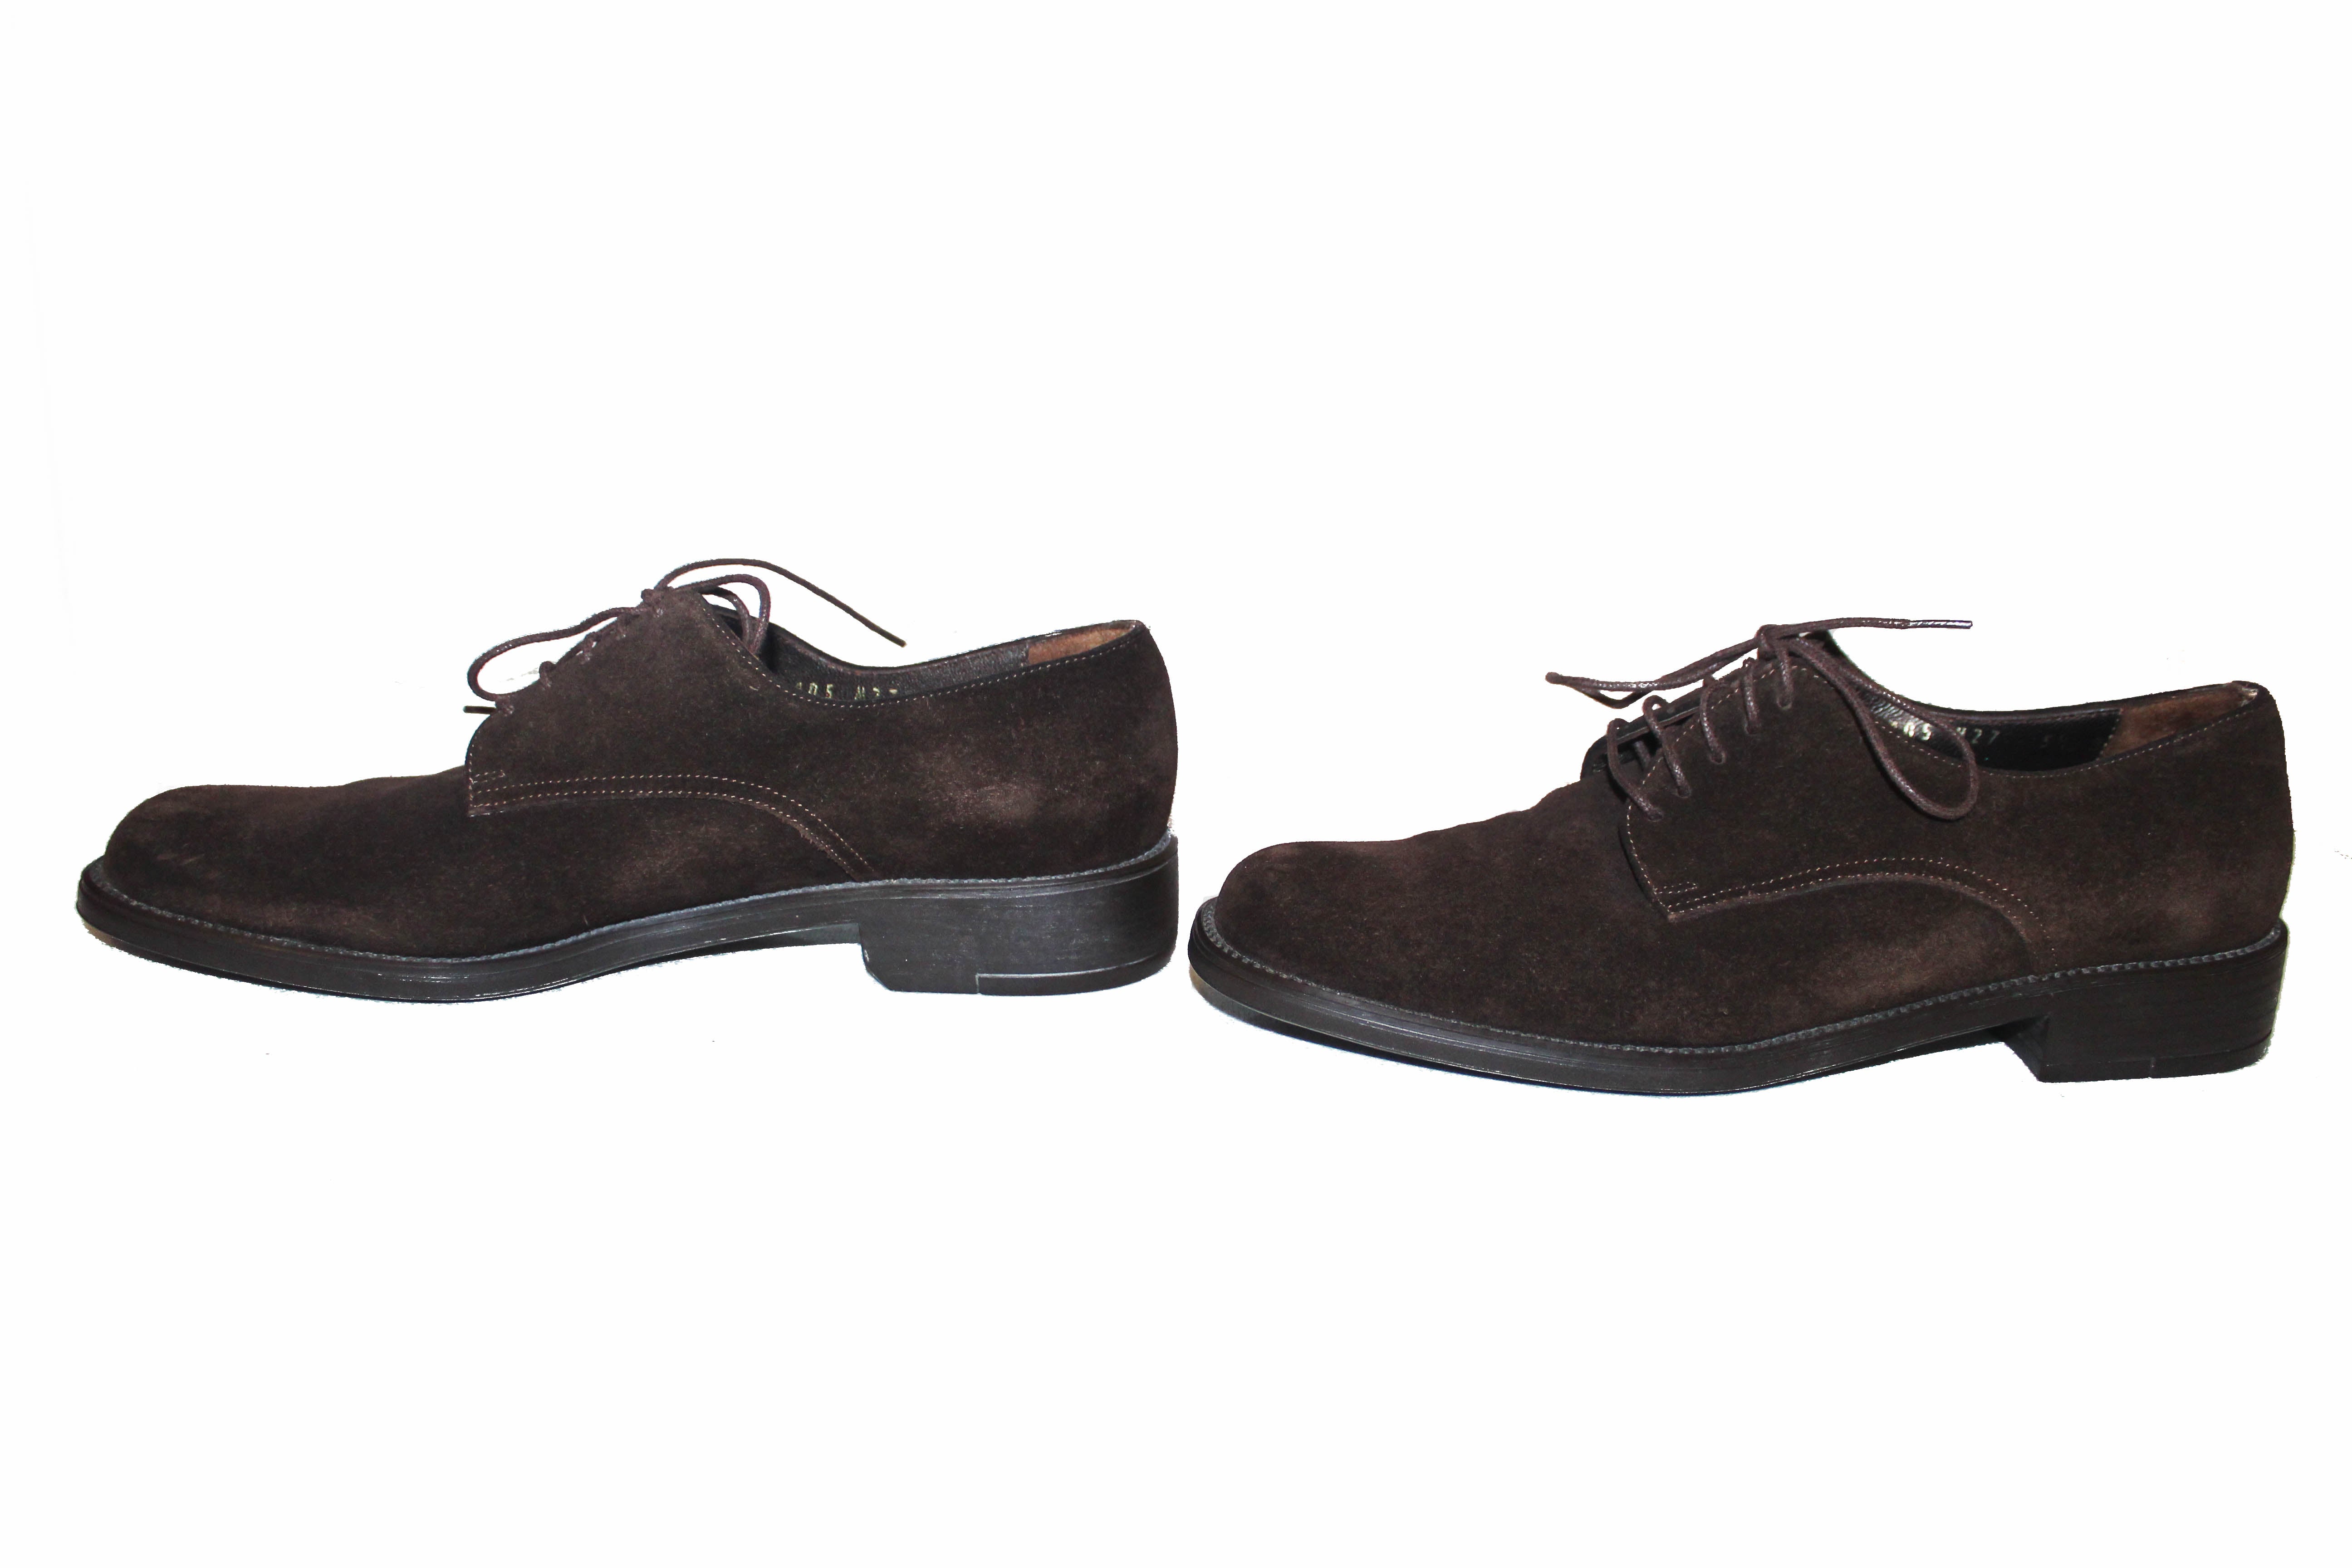 Authentic Salvatore Ferragamo Sport Brown Suede Leather Dress Shoes 5.5 B